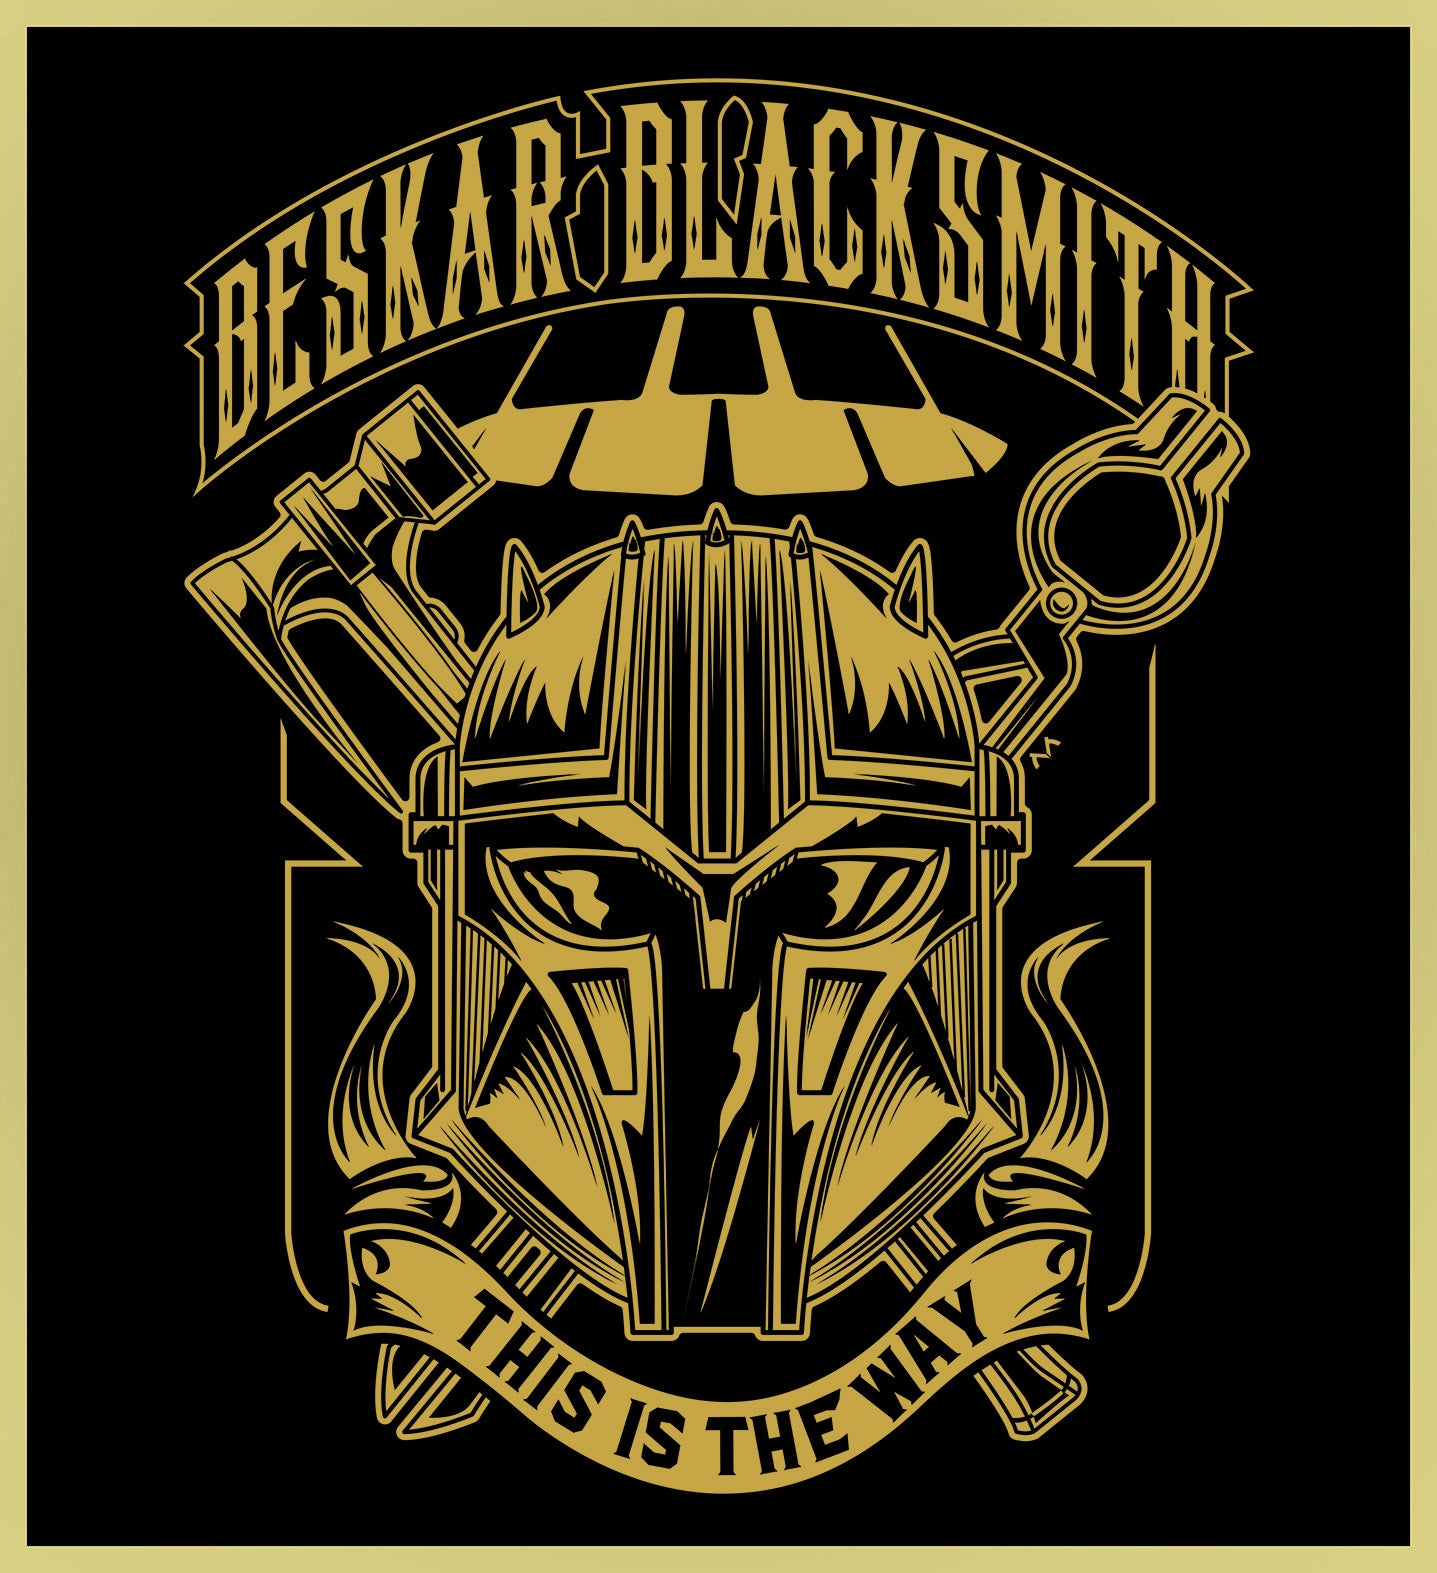 BESKAR BLACKSMITH - THE  ARMORER - NEW POP TURBO TEE!